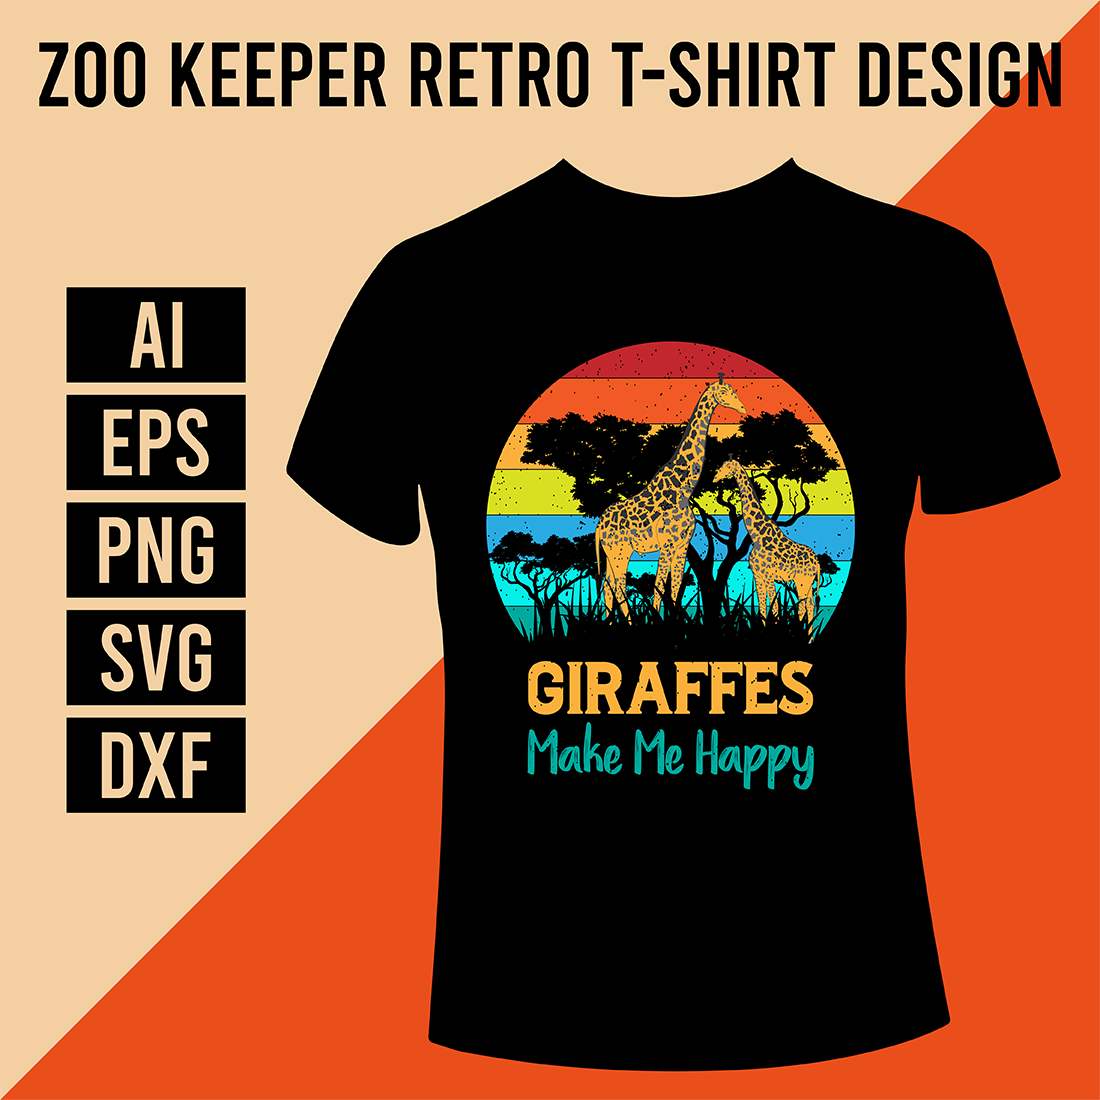 Zoo Keeper Retro T-Shirt Design cover image.